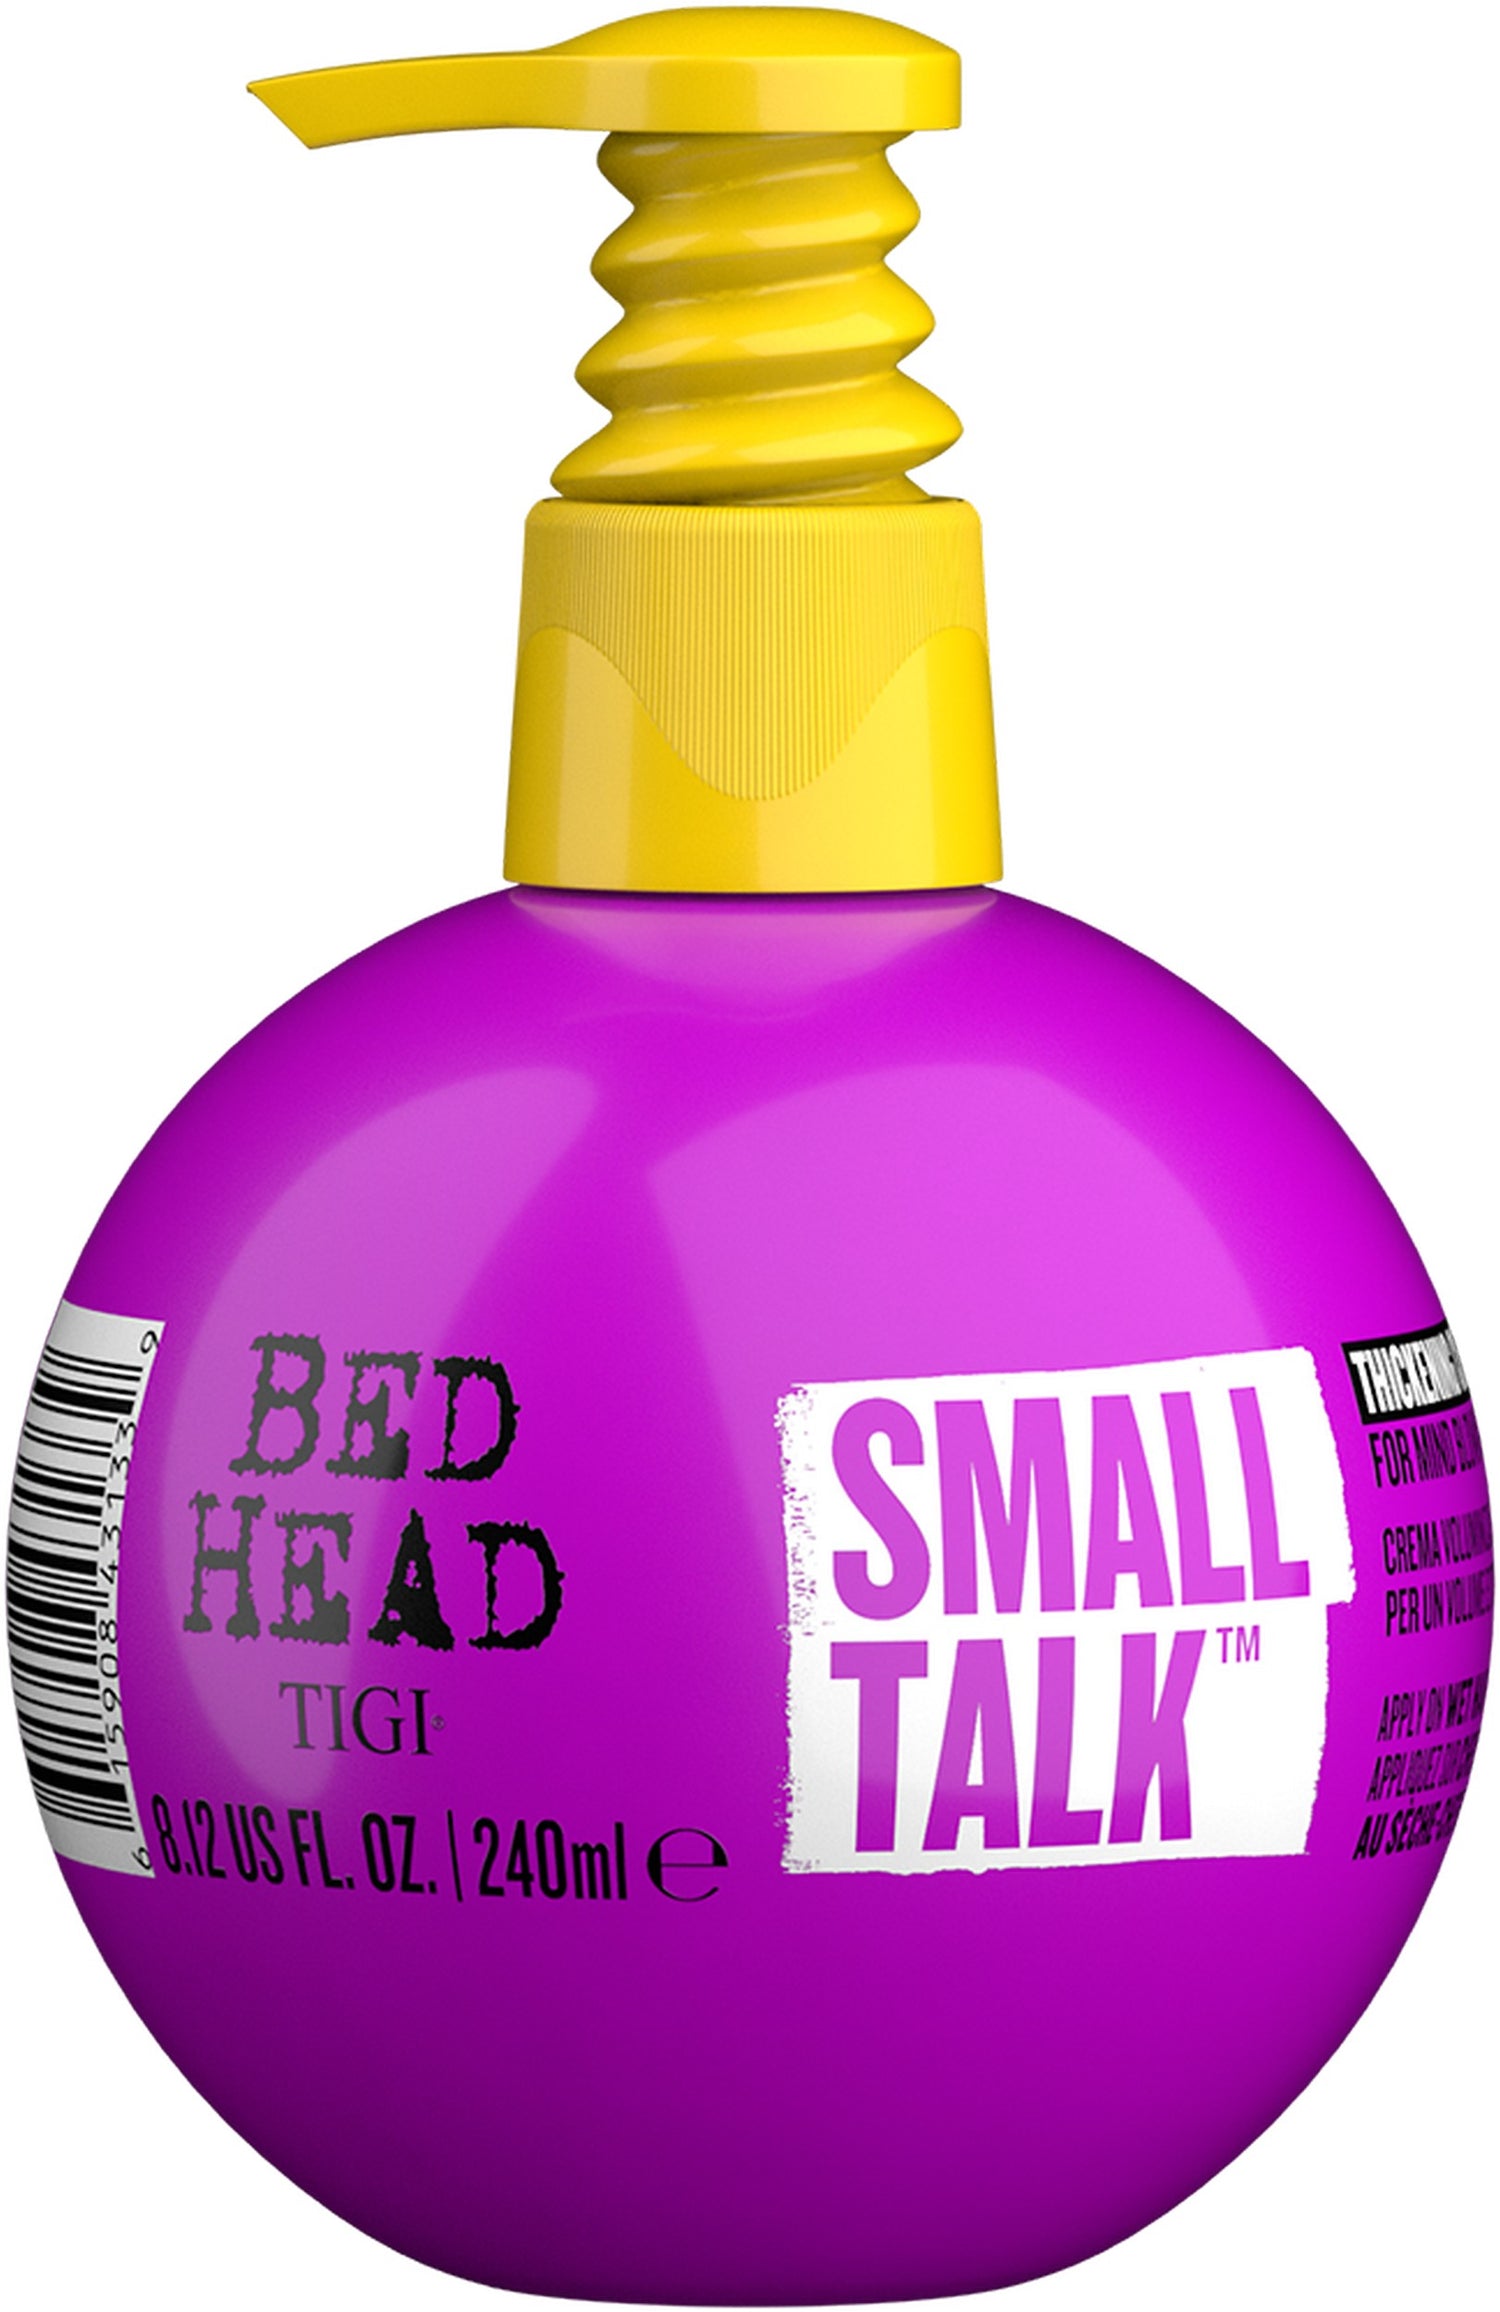 BED HEAD SMALL TALK CREAM 240ML